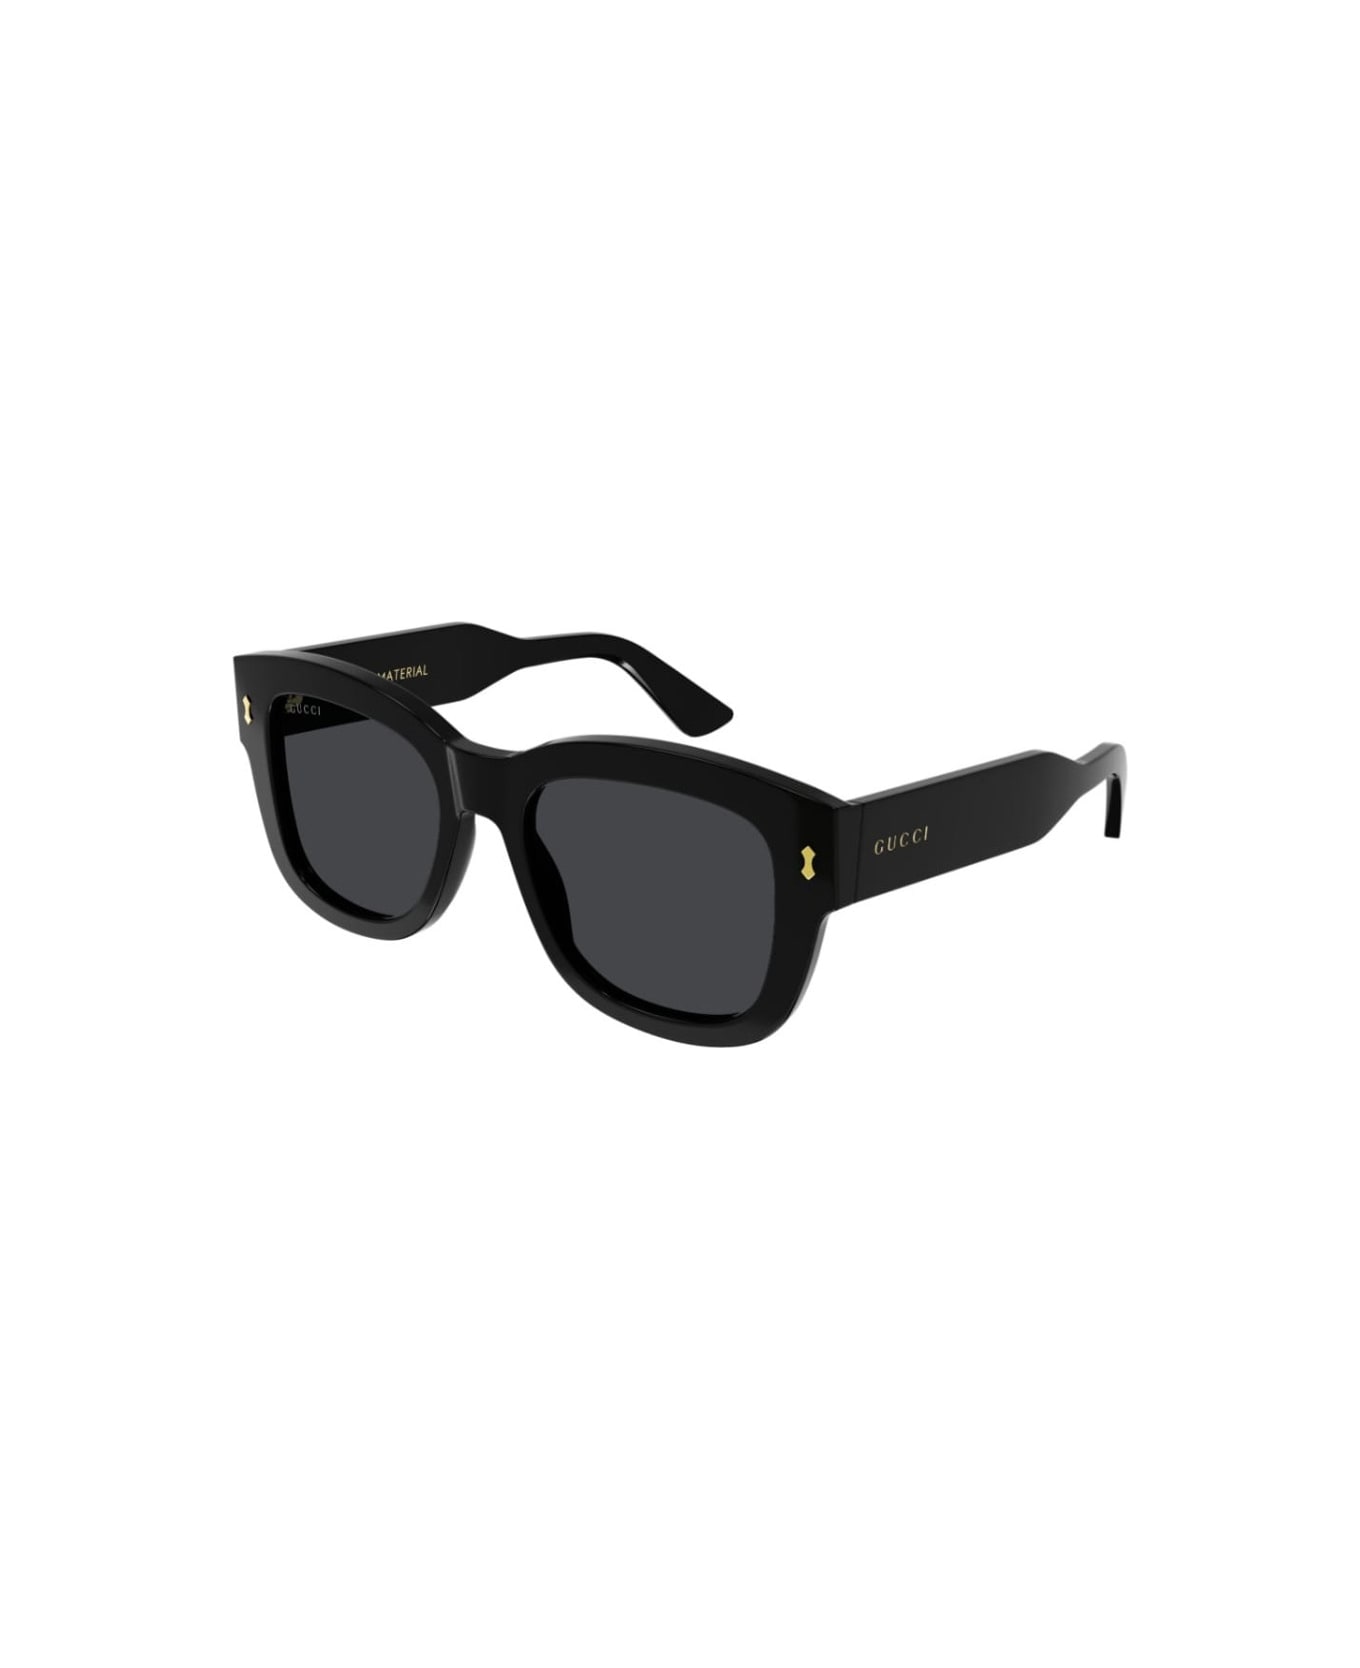 Gucci Eyewear GG1110S001 Sunglasses サングラス